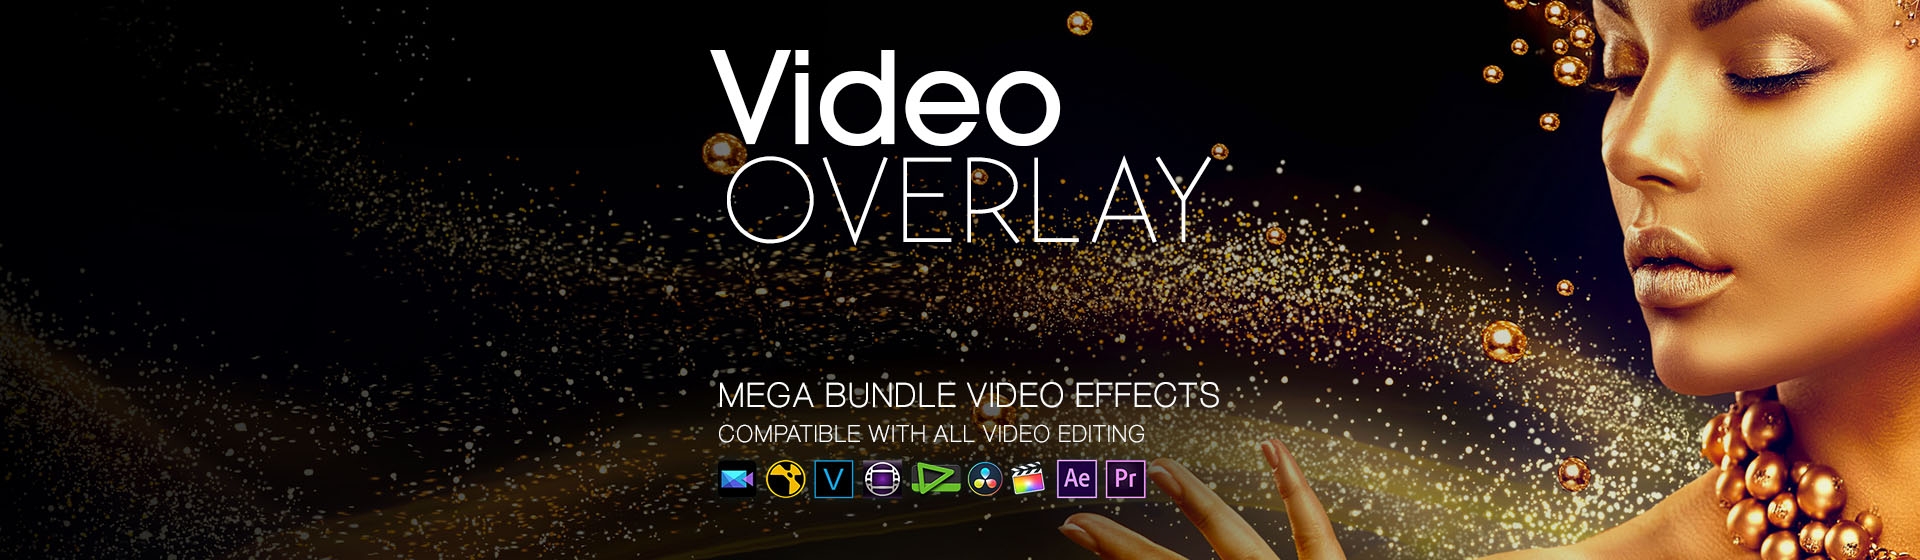 Video Overlay